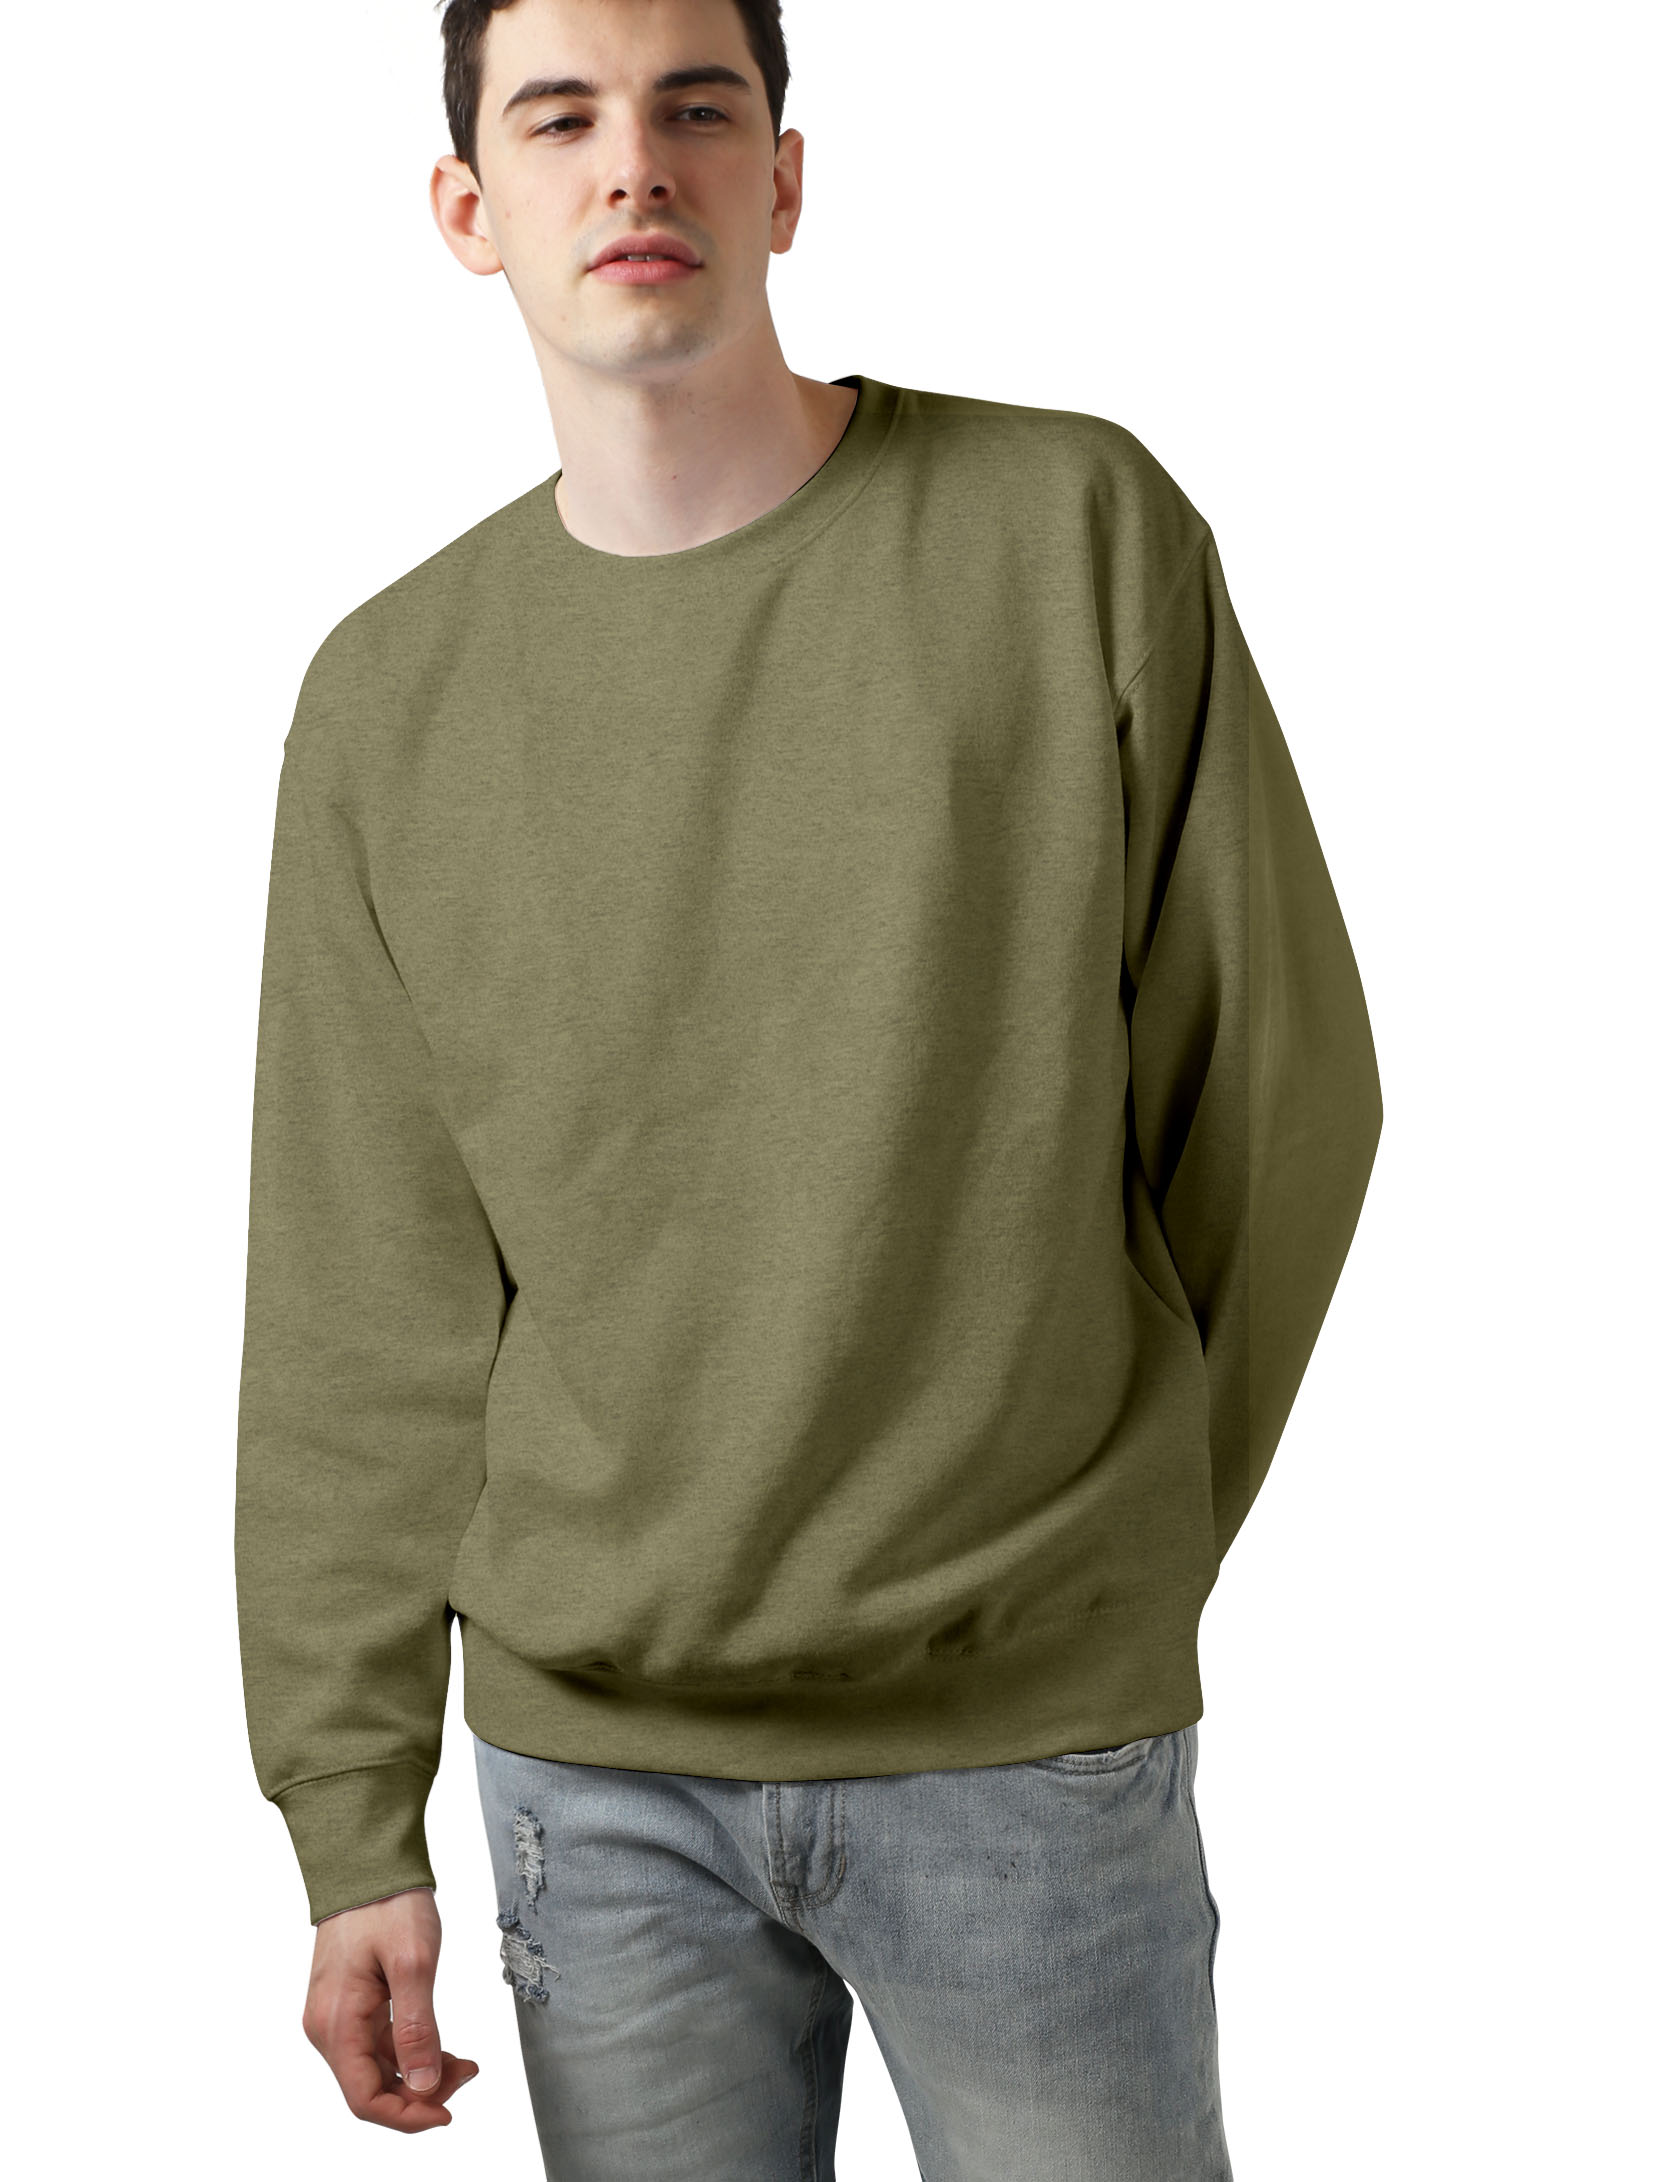 Hat and Beyond Mens Premium Fleece Sweatshirt Crew Neck Brushed Cotton Sweater